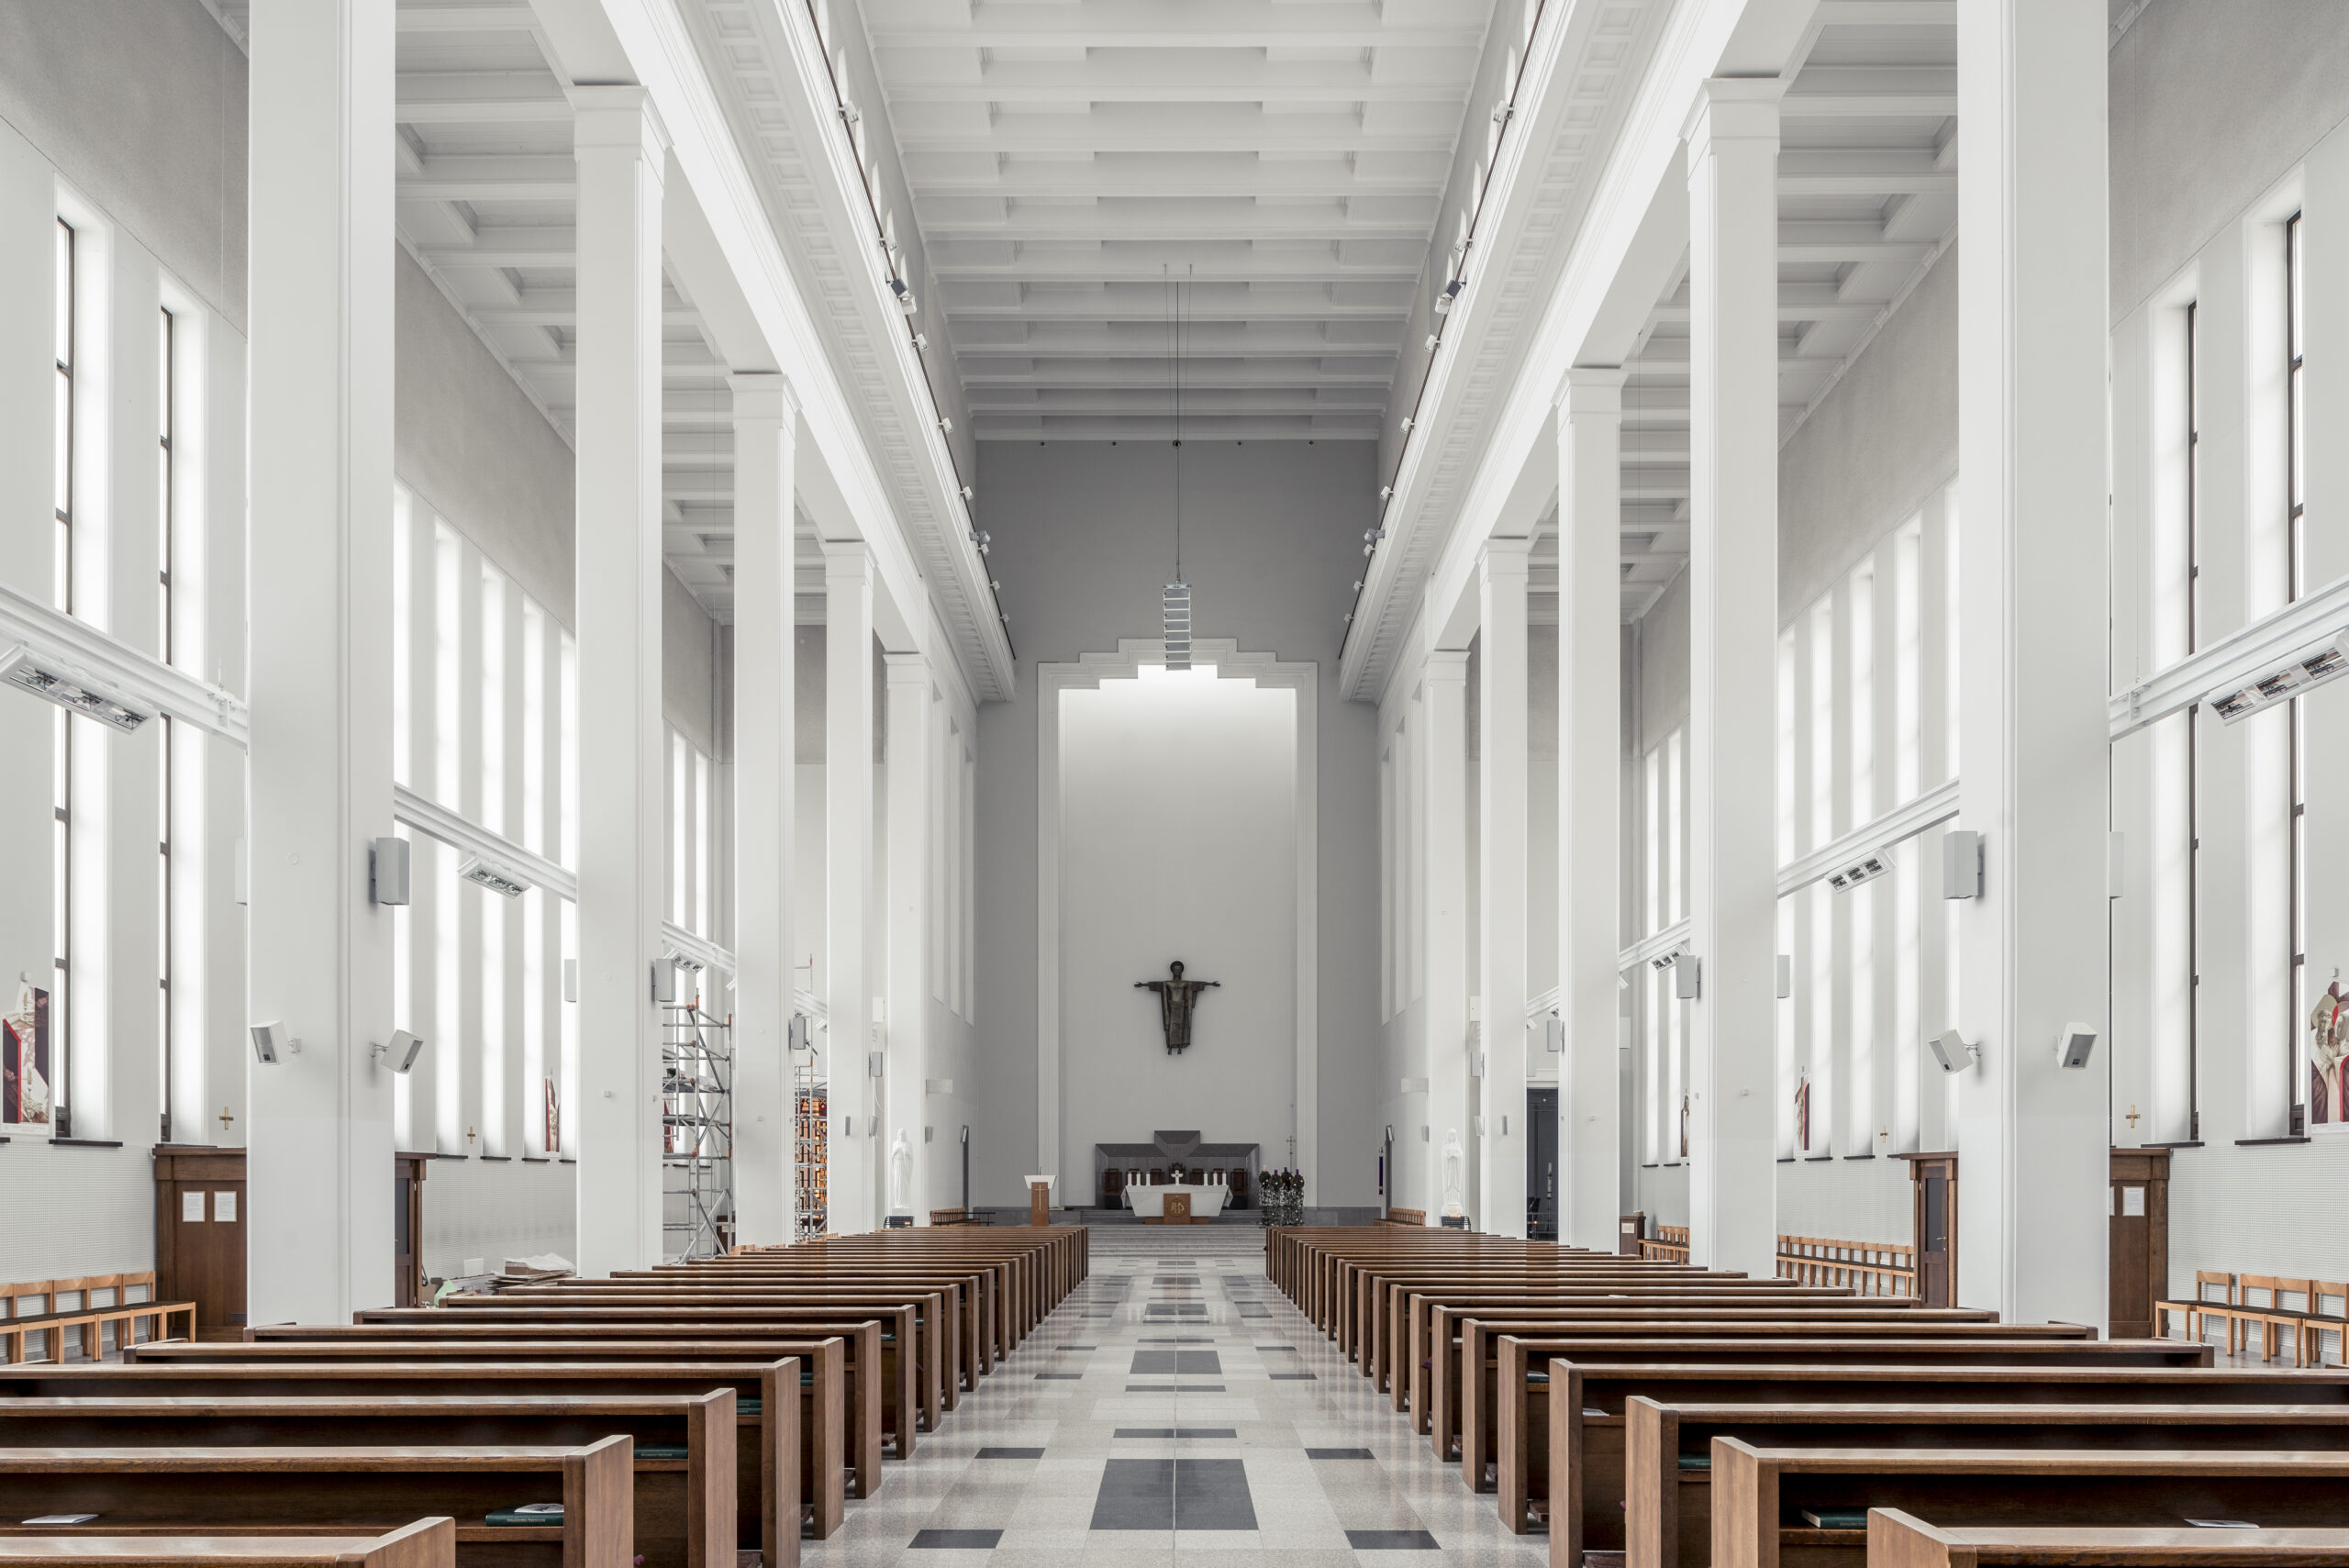 The Resurrection Church, Kaunas. Designed by. K. Reisonas. 1934-1940. 2005. Photo by Lukas Mykolaitis.